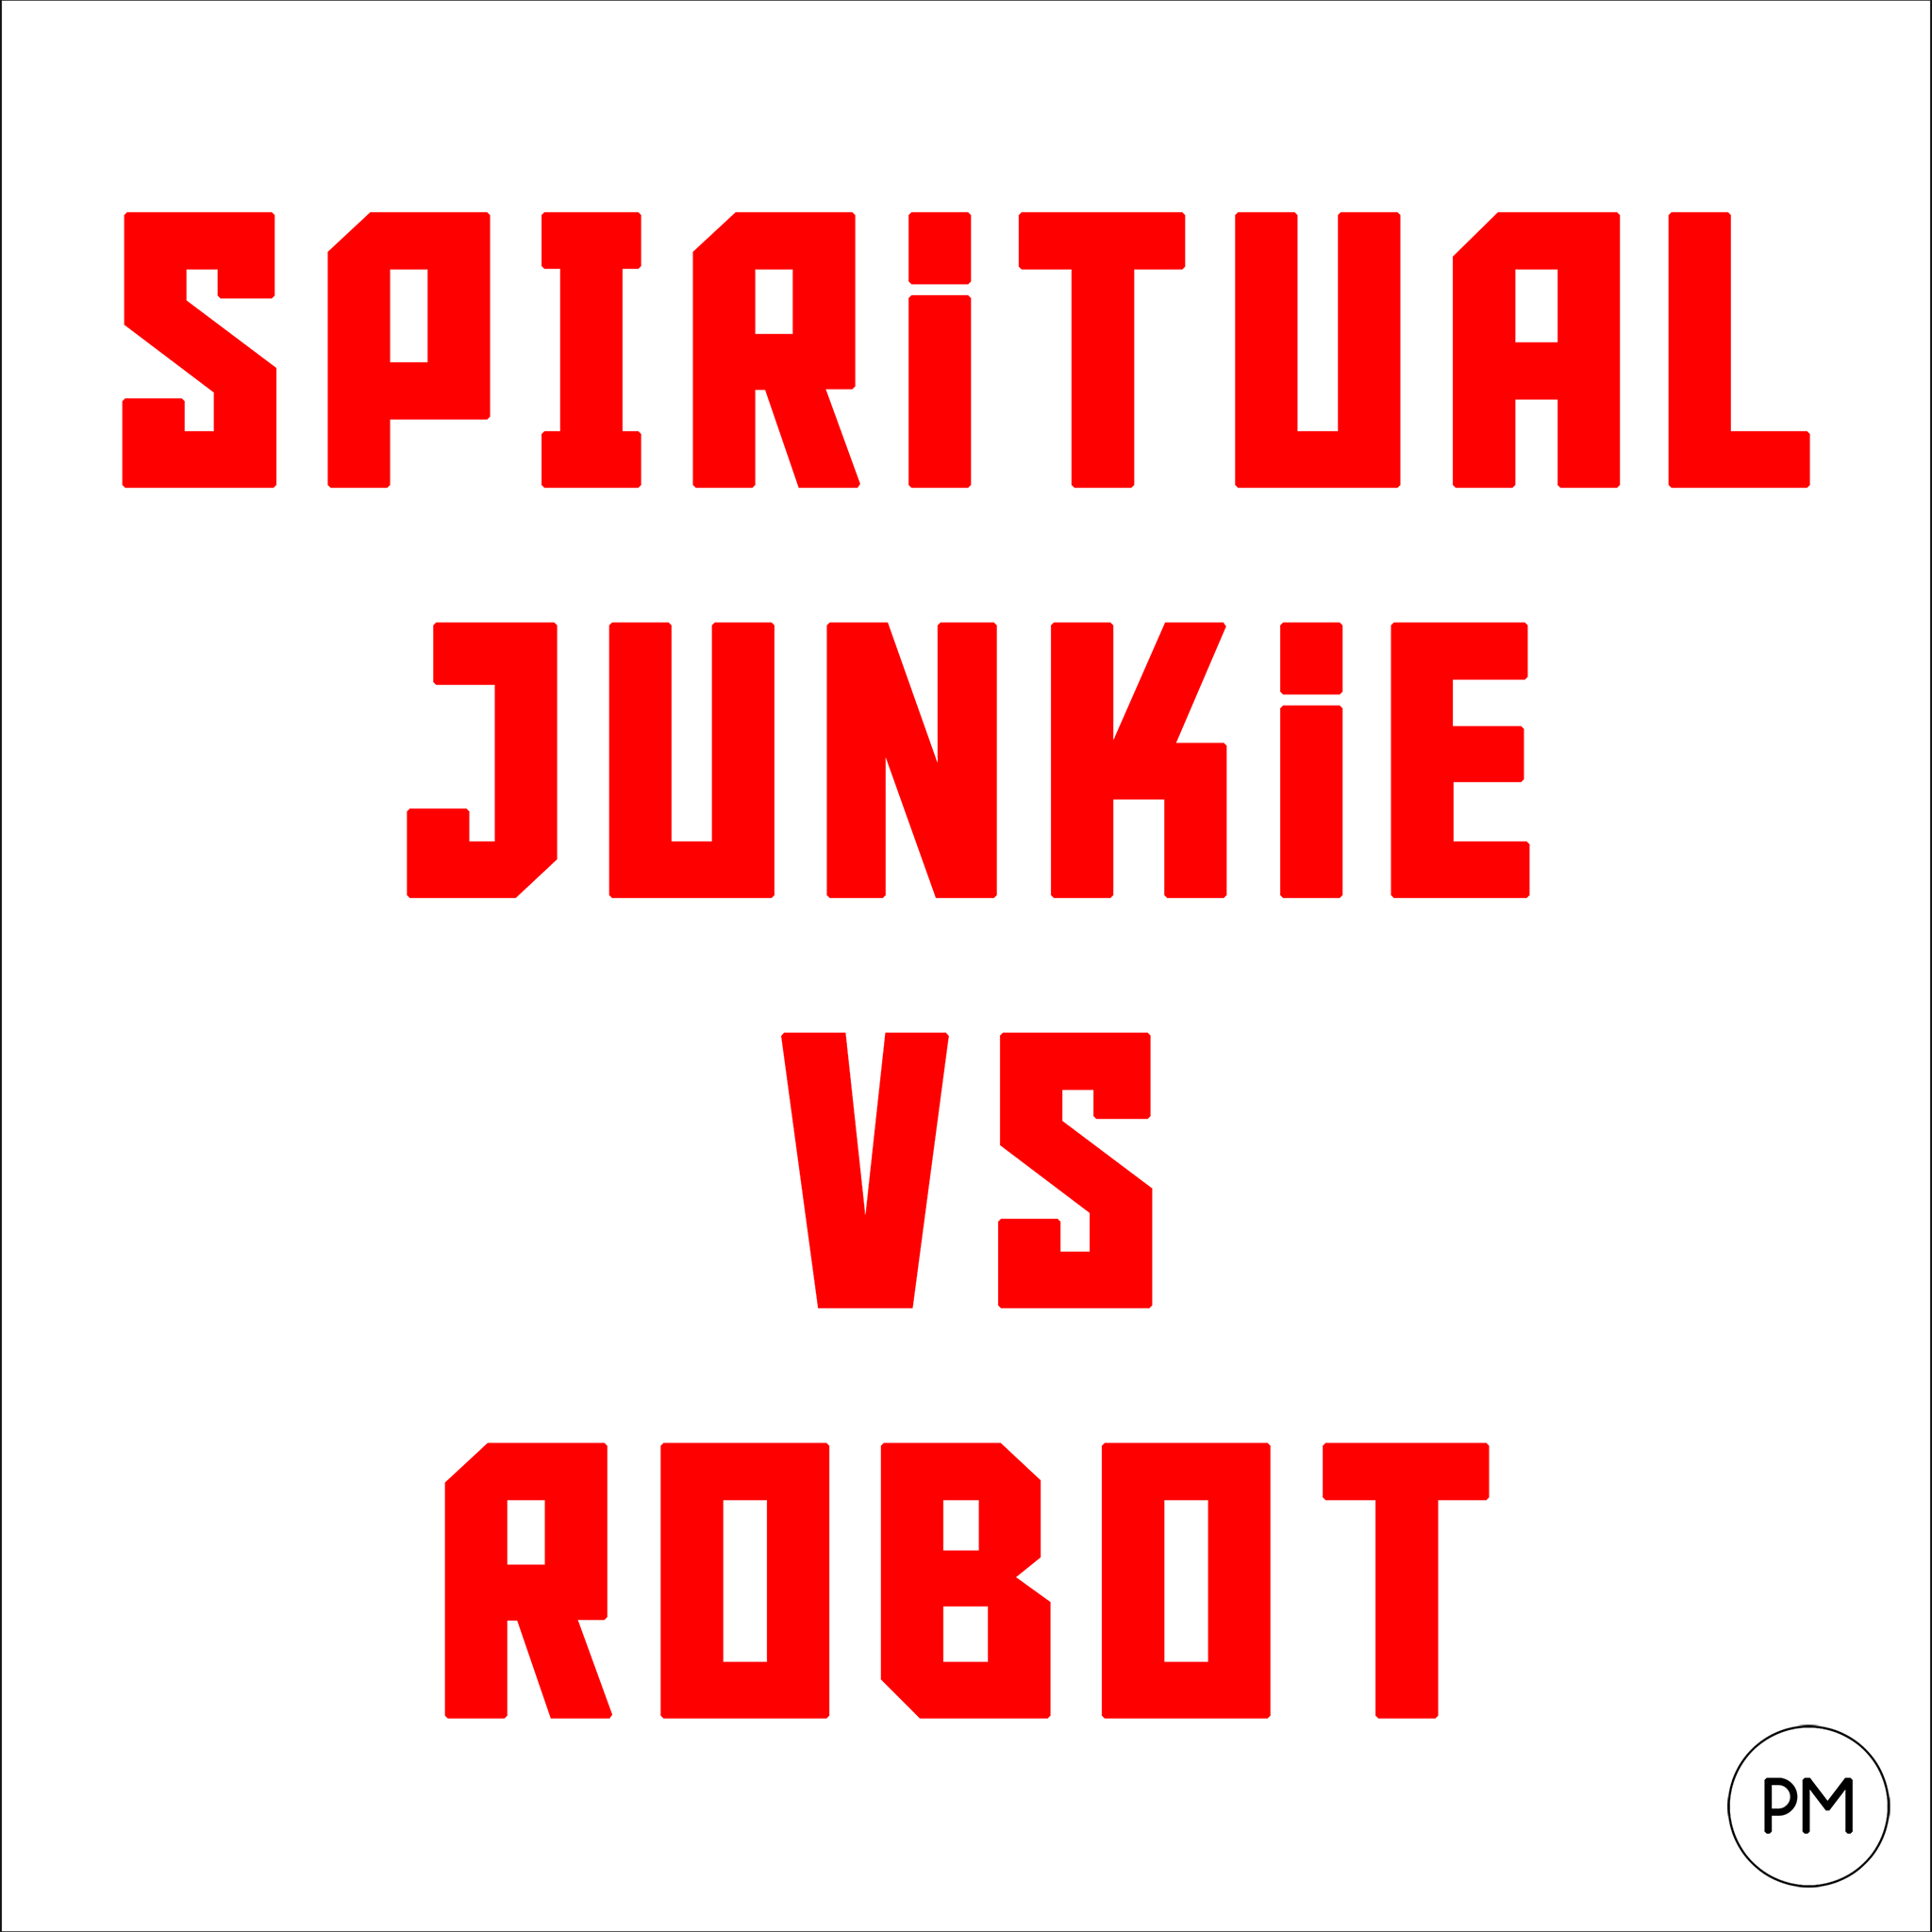 Spiritual Junkie vs Robot